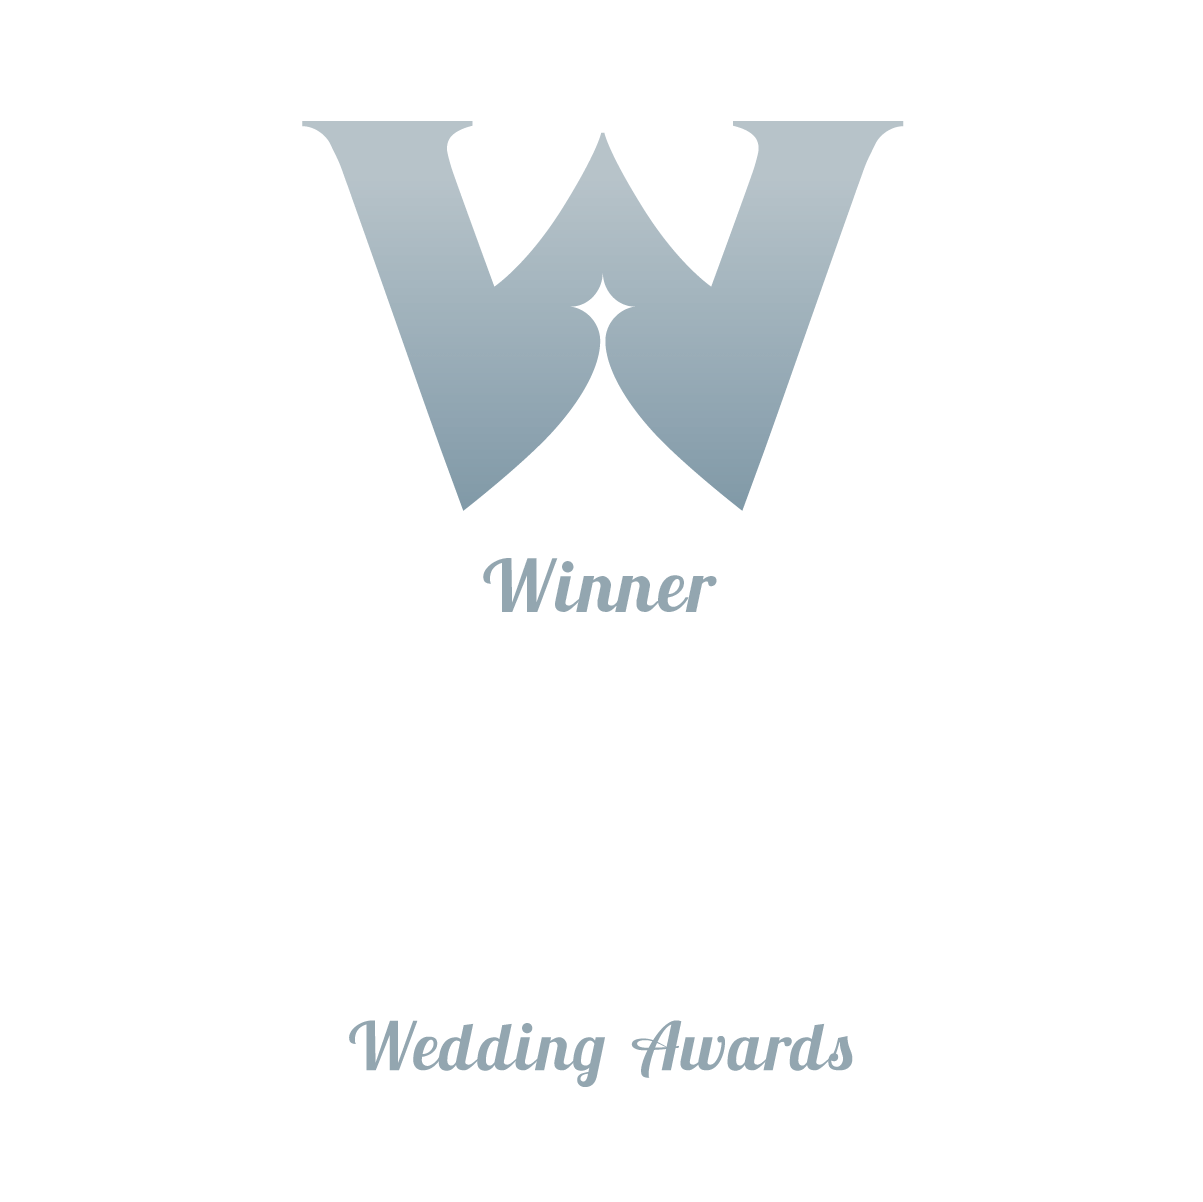 Wedding awards